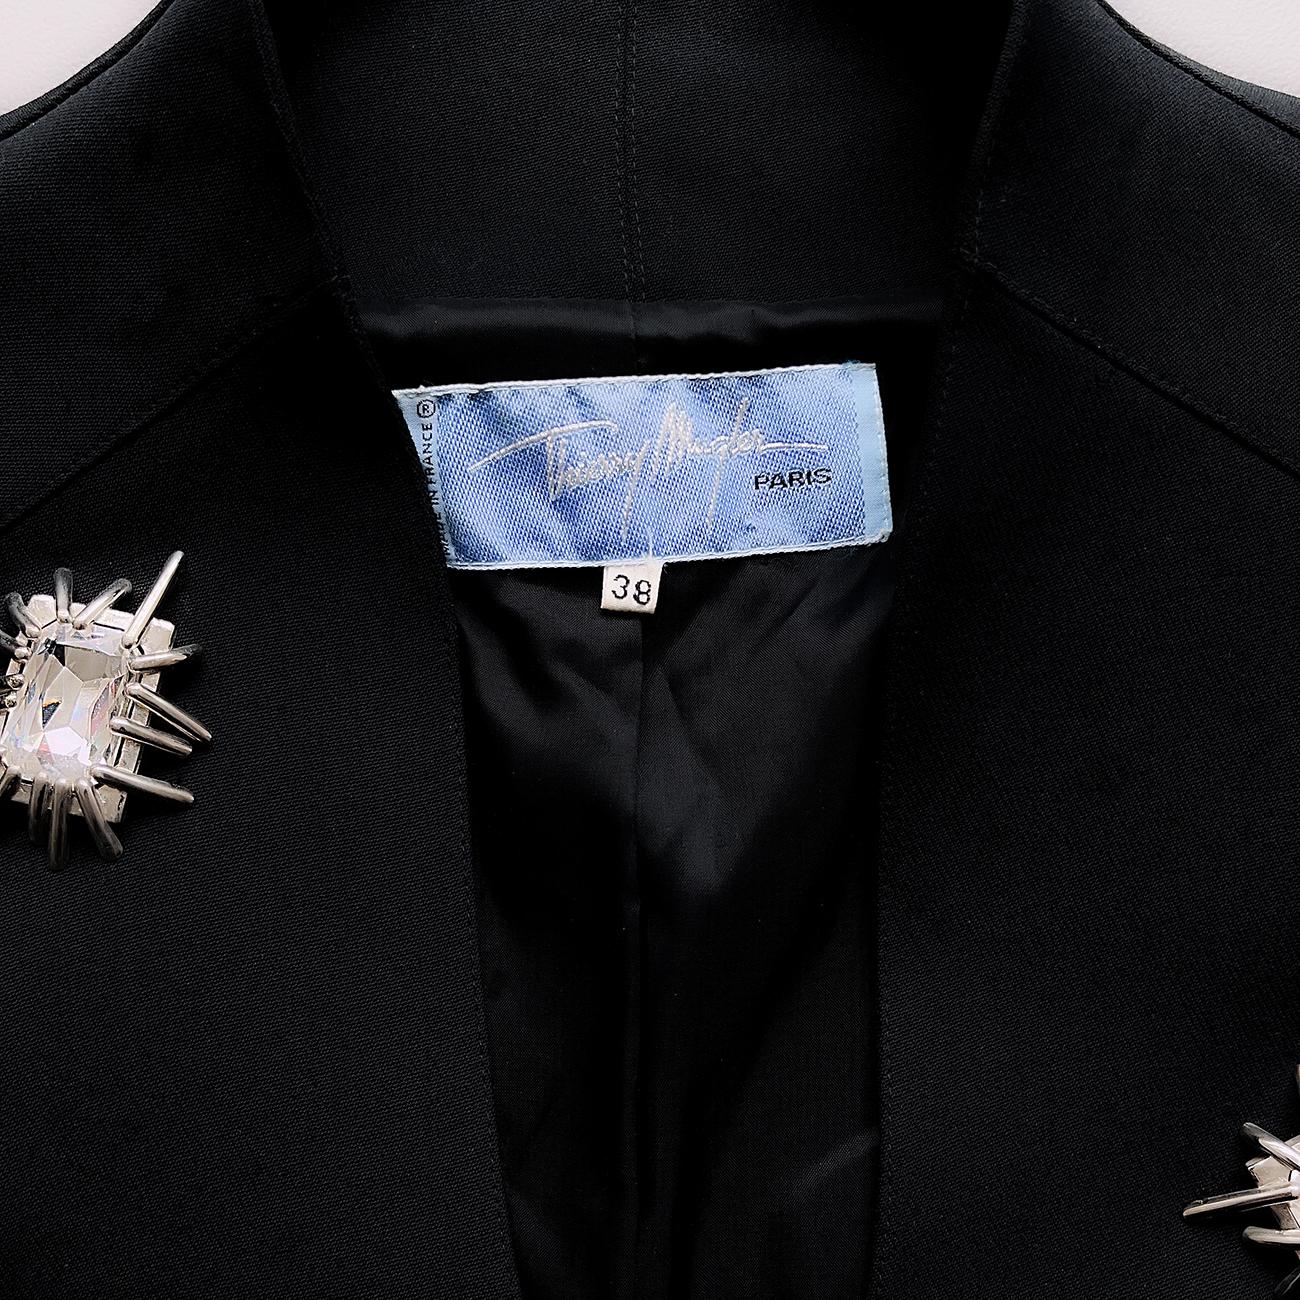 Gorgeous Thierry Mugler Jacket Diamond Jewel Rare Dramatic Black Jacket For Sale 1